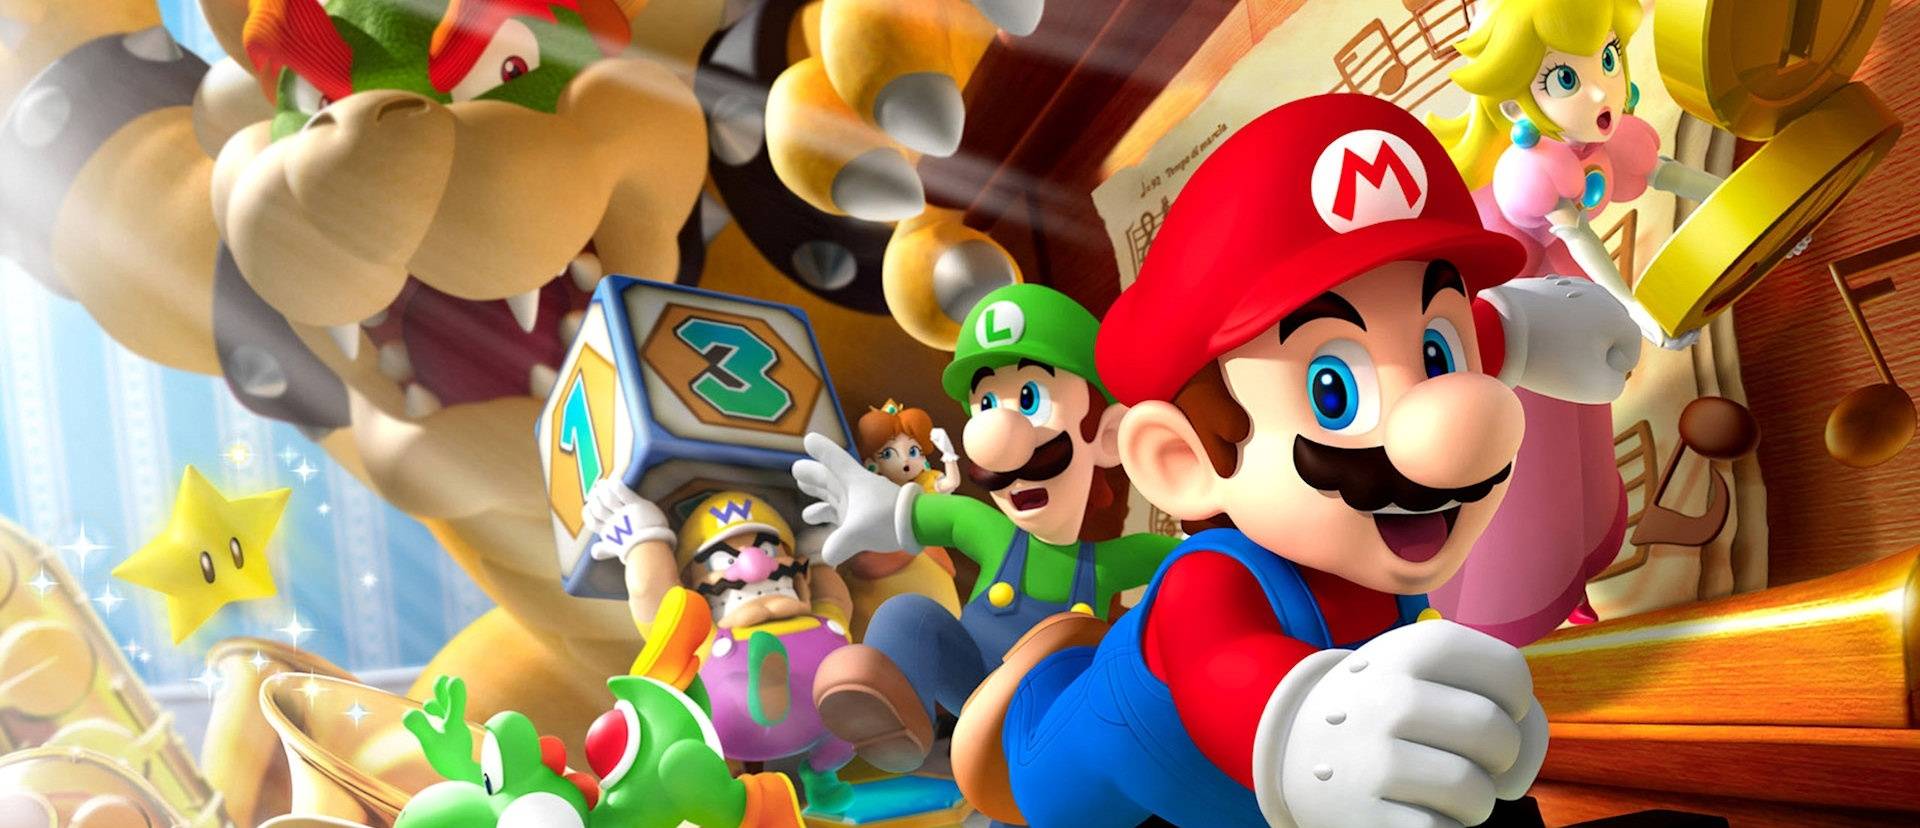 Super Mario Maker magyar előzetes